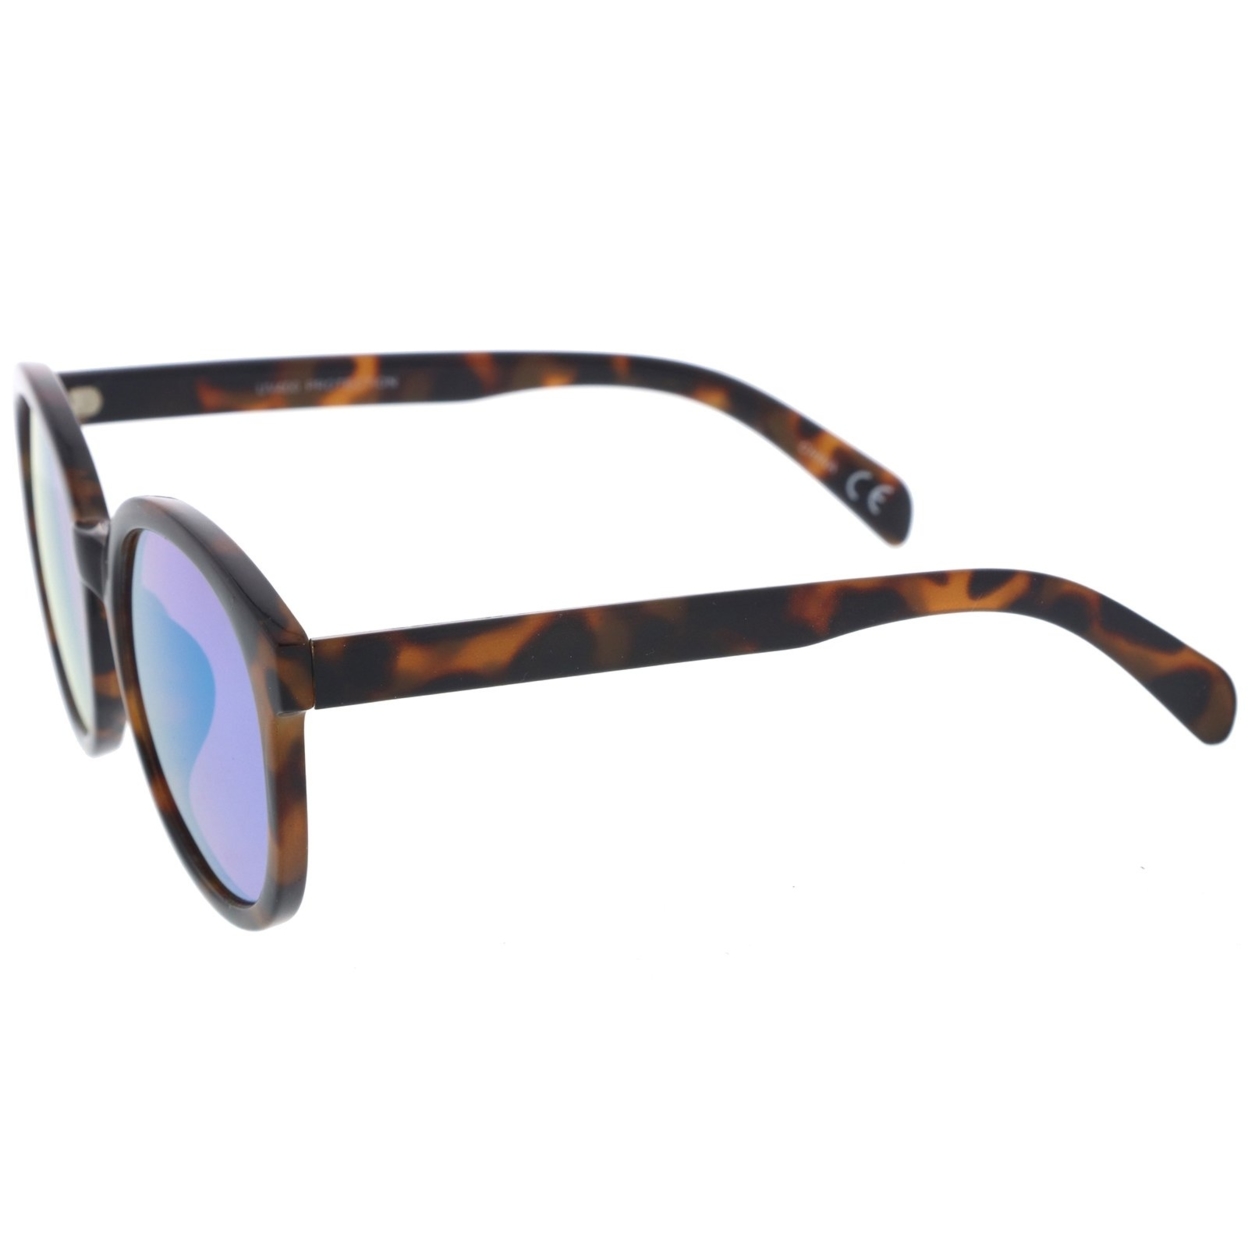 Oversize Super Flat Colored Mirror Lens Round Sunglasses 54mm - Creme / Blue